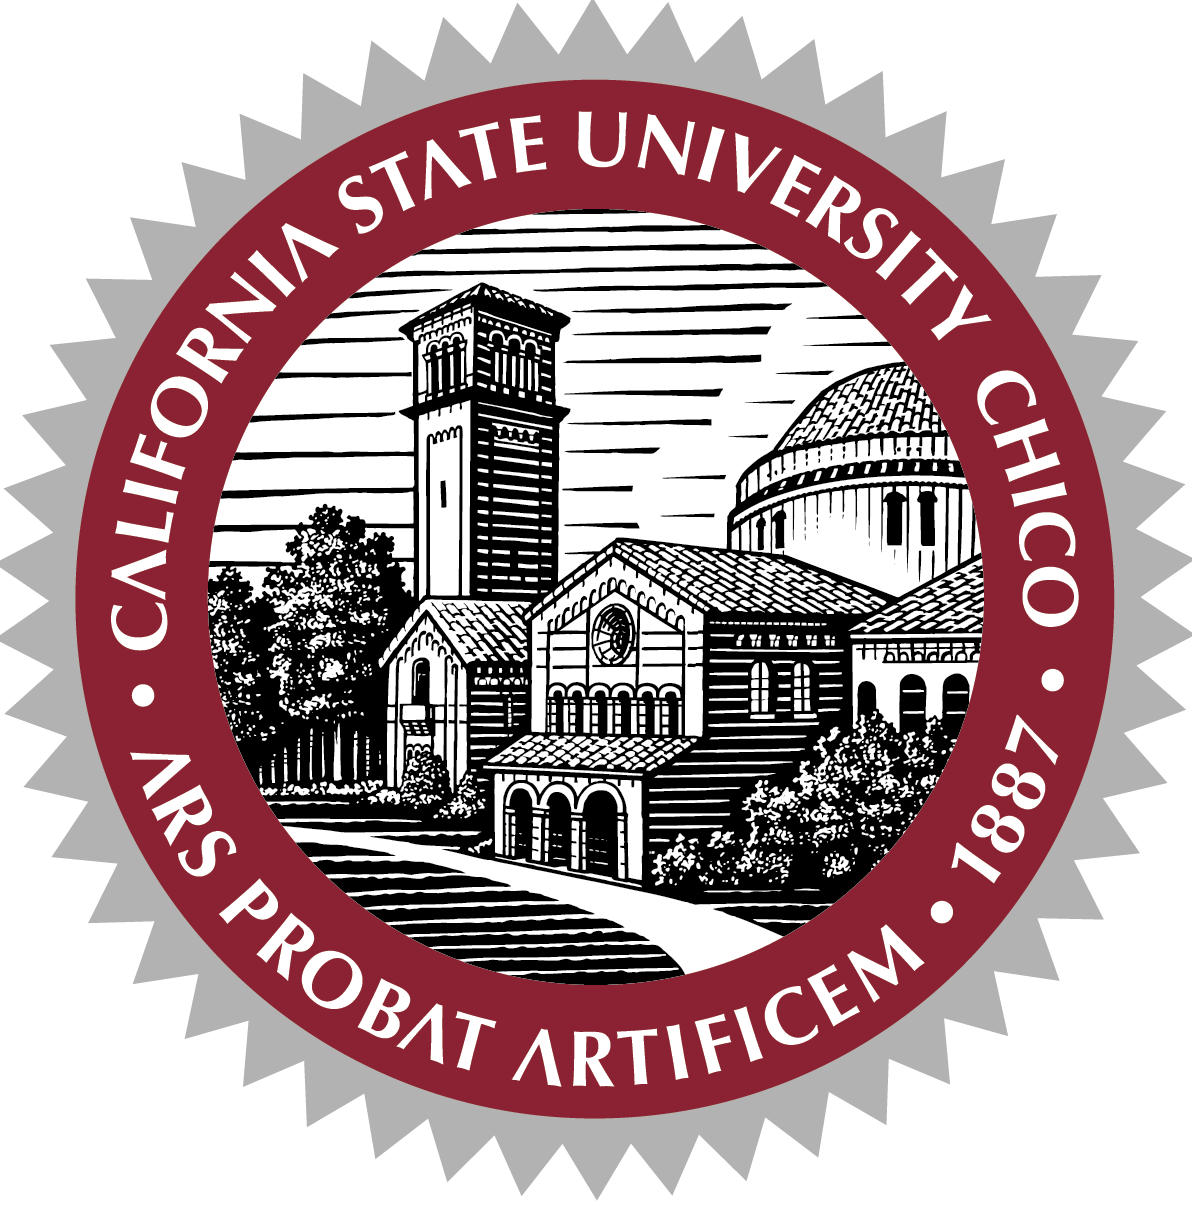 The State Logo - Logos, Seals & Signature - University Communicators Guide - CSU, Chico